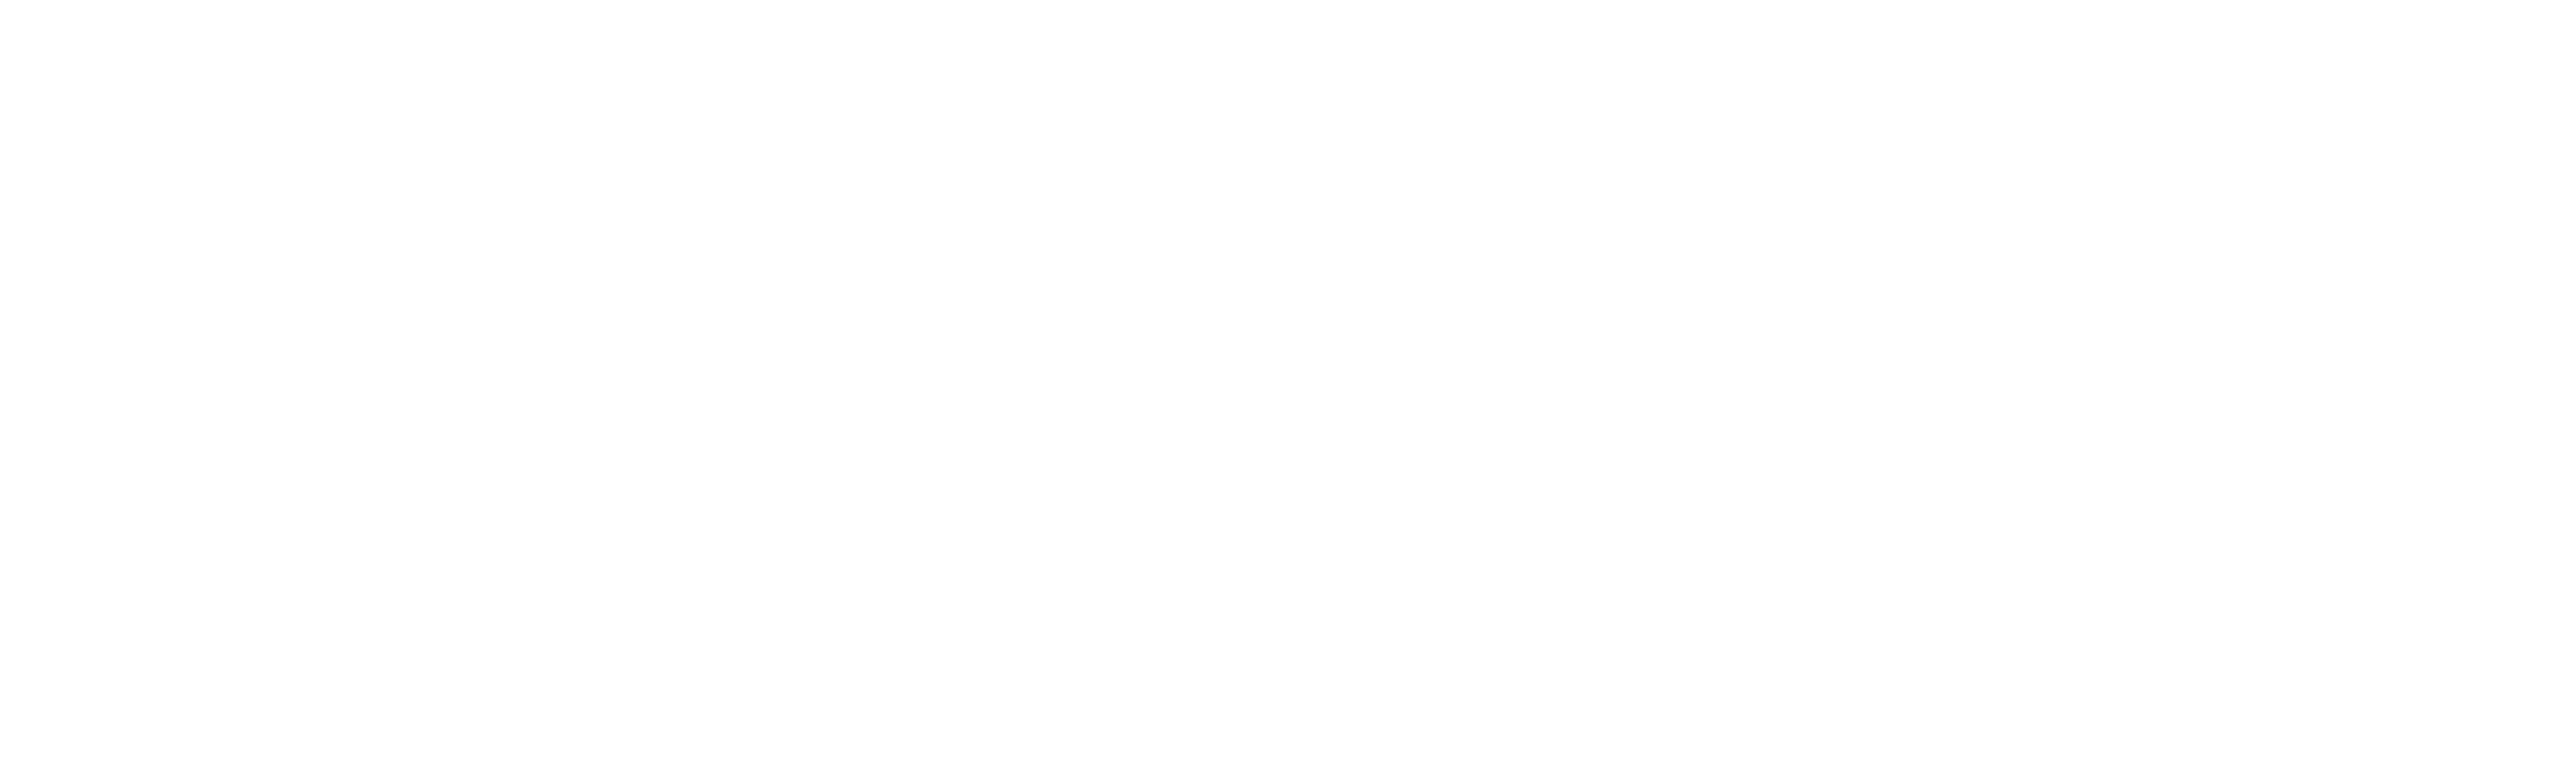 terabits-technolab